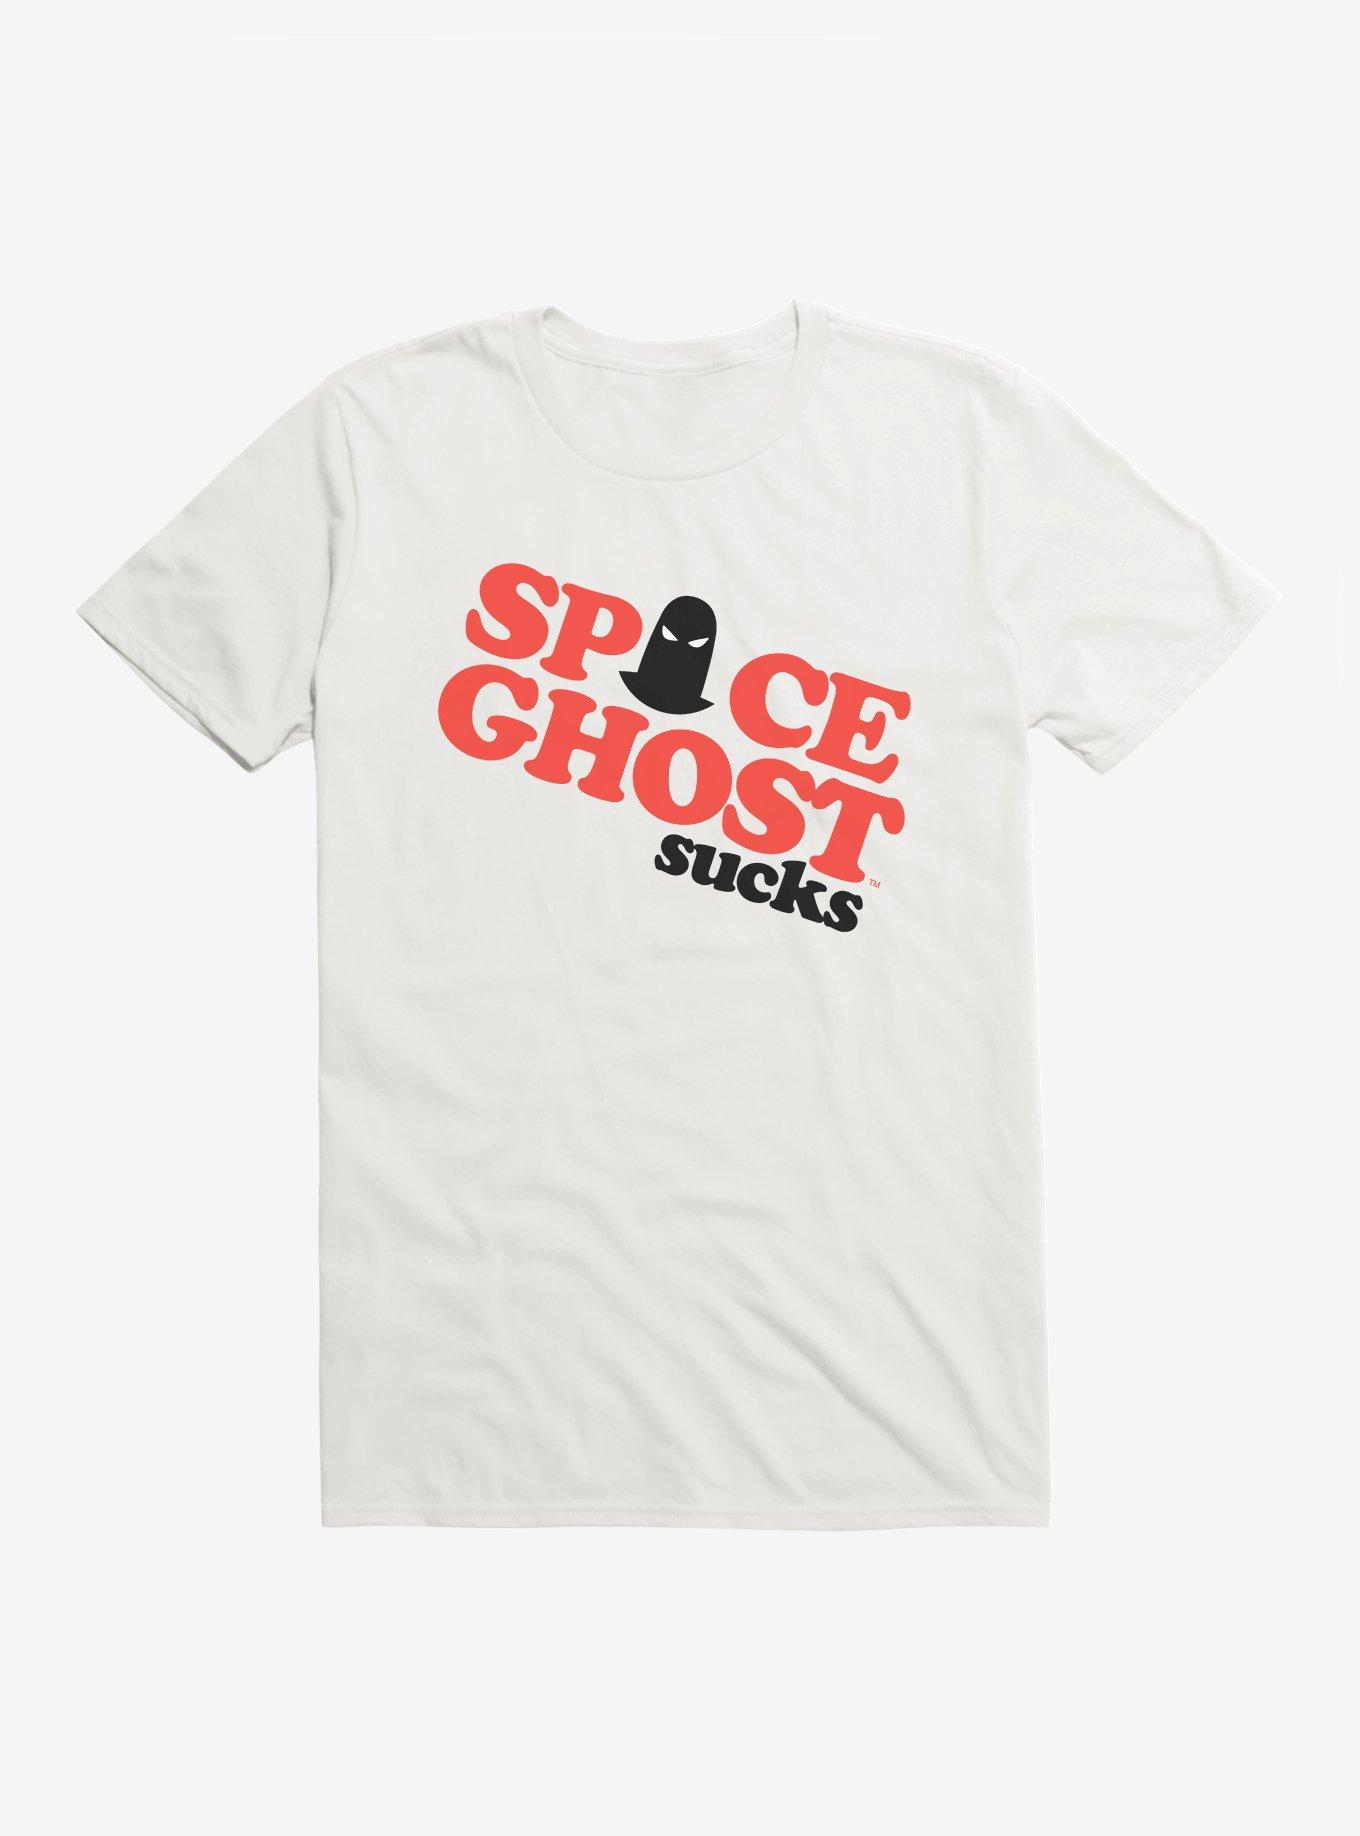 Space Ghost Sucks T-Shirt